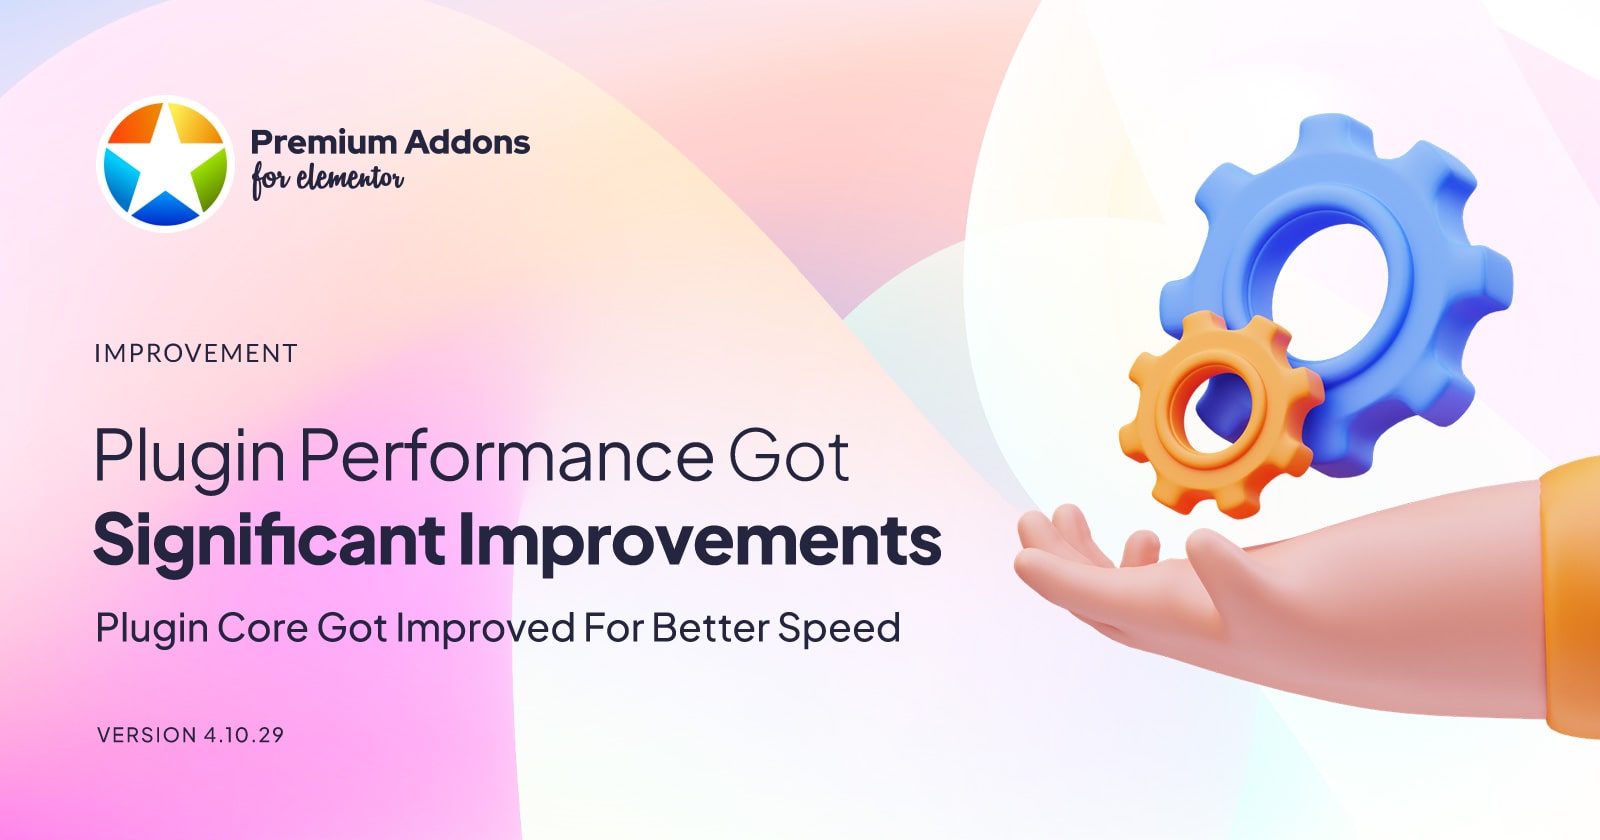 Premium Addons for Elementor core enhancements